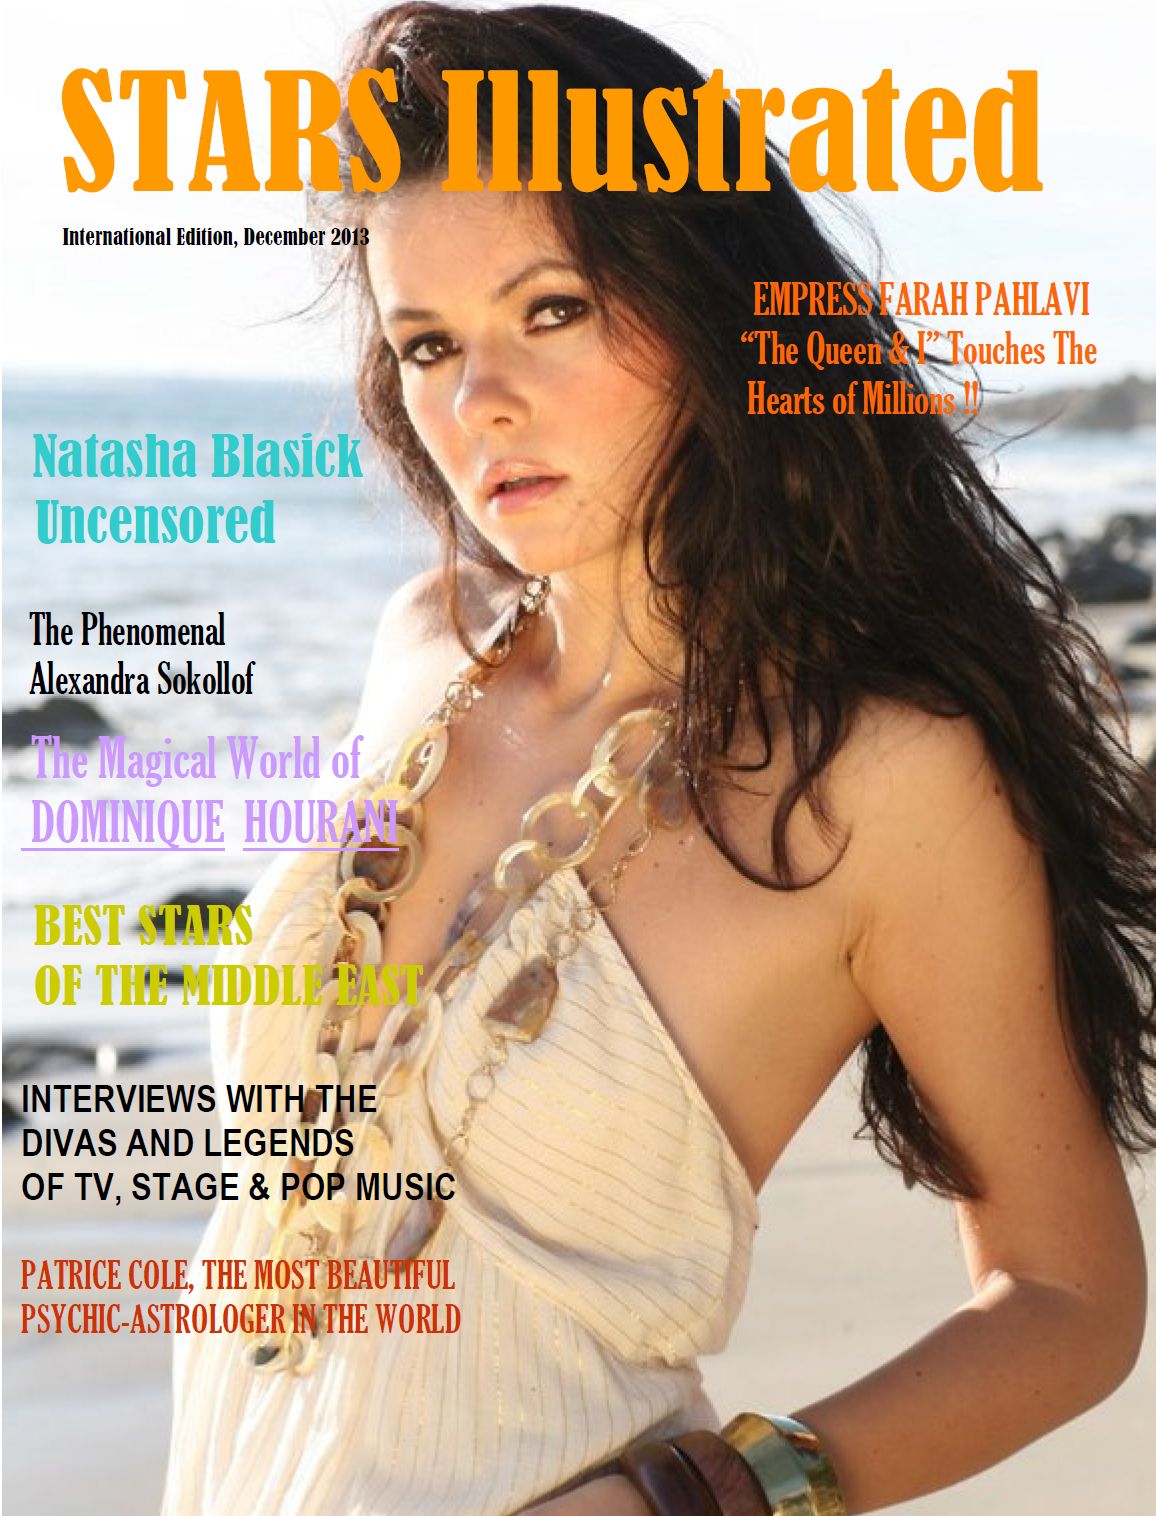 Natasha Blasick cover story of Stars Illustrated, International Edition, December 2013